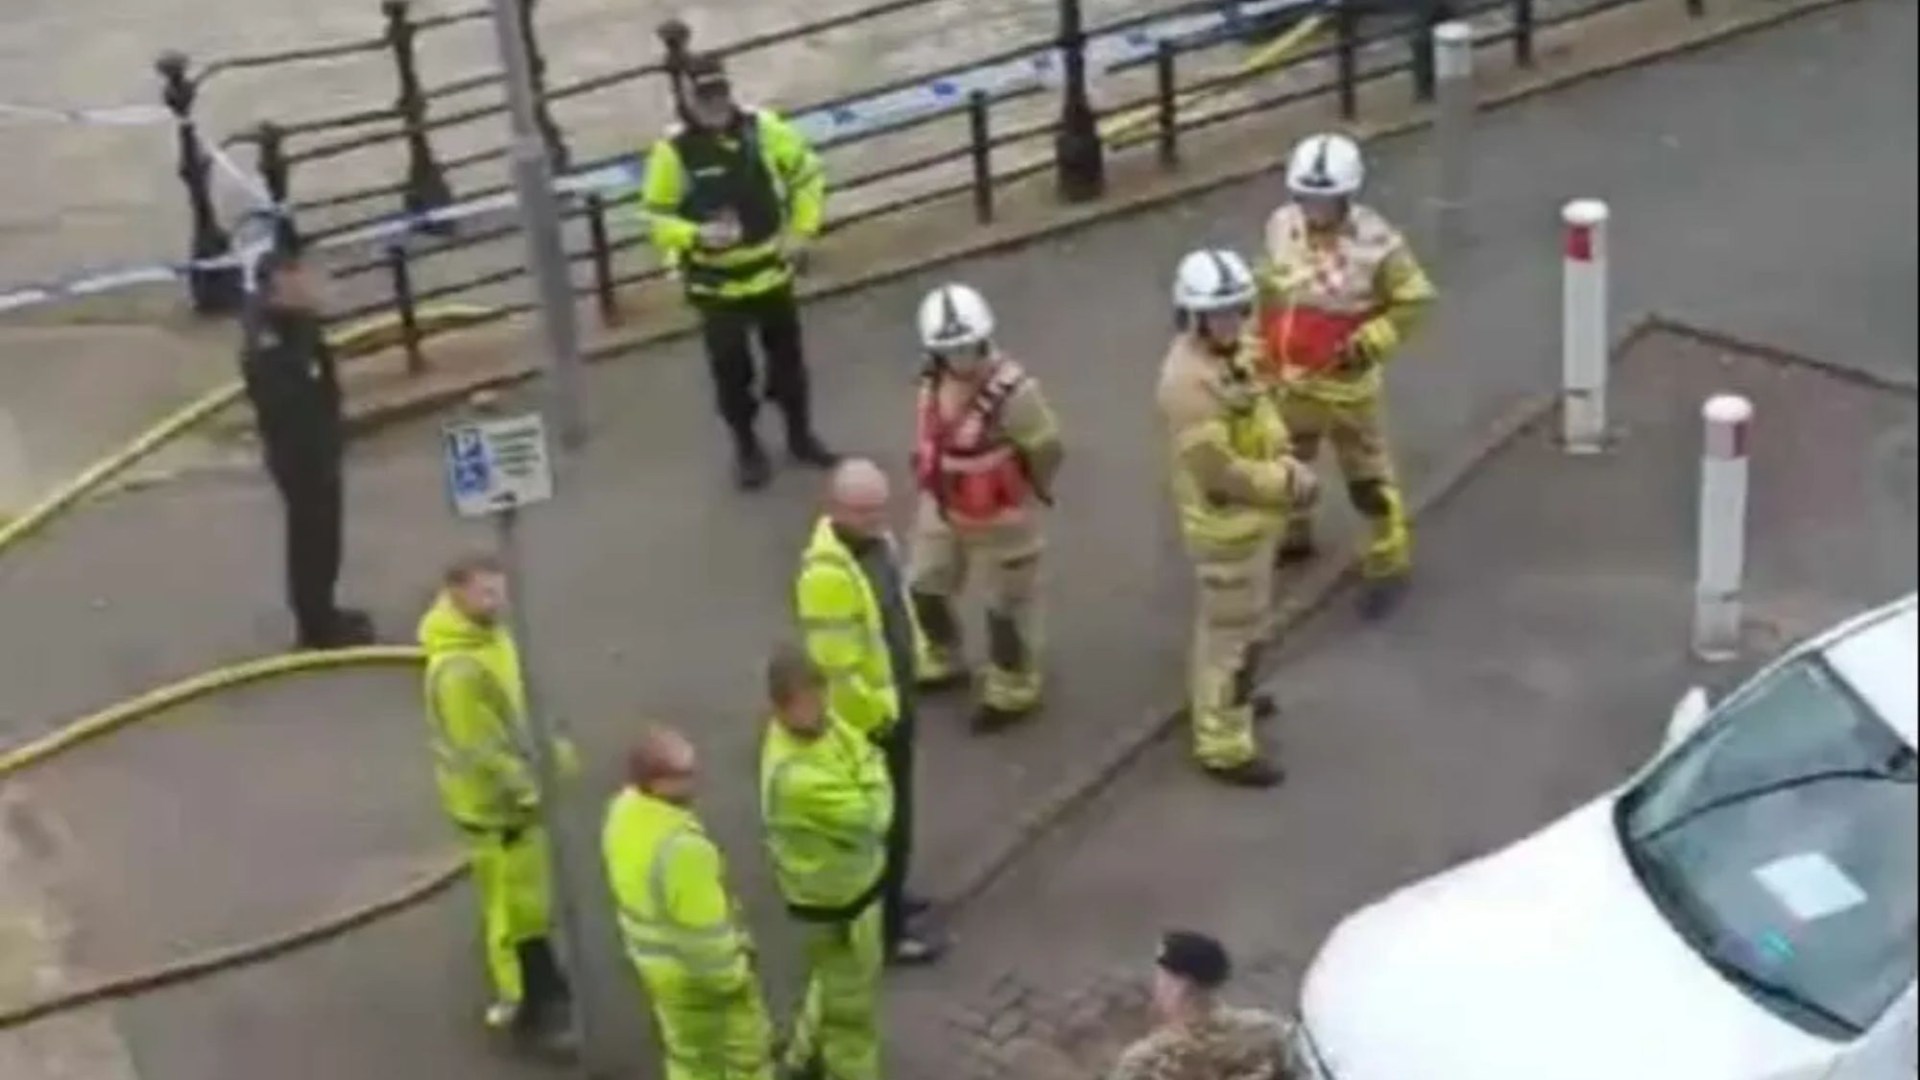 Urgent lockdown in Darwen town centre after grenade found near Wetherspoons sparking huge emergency response [Video]